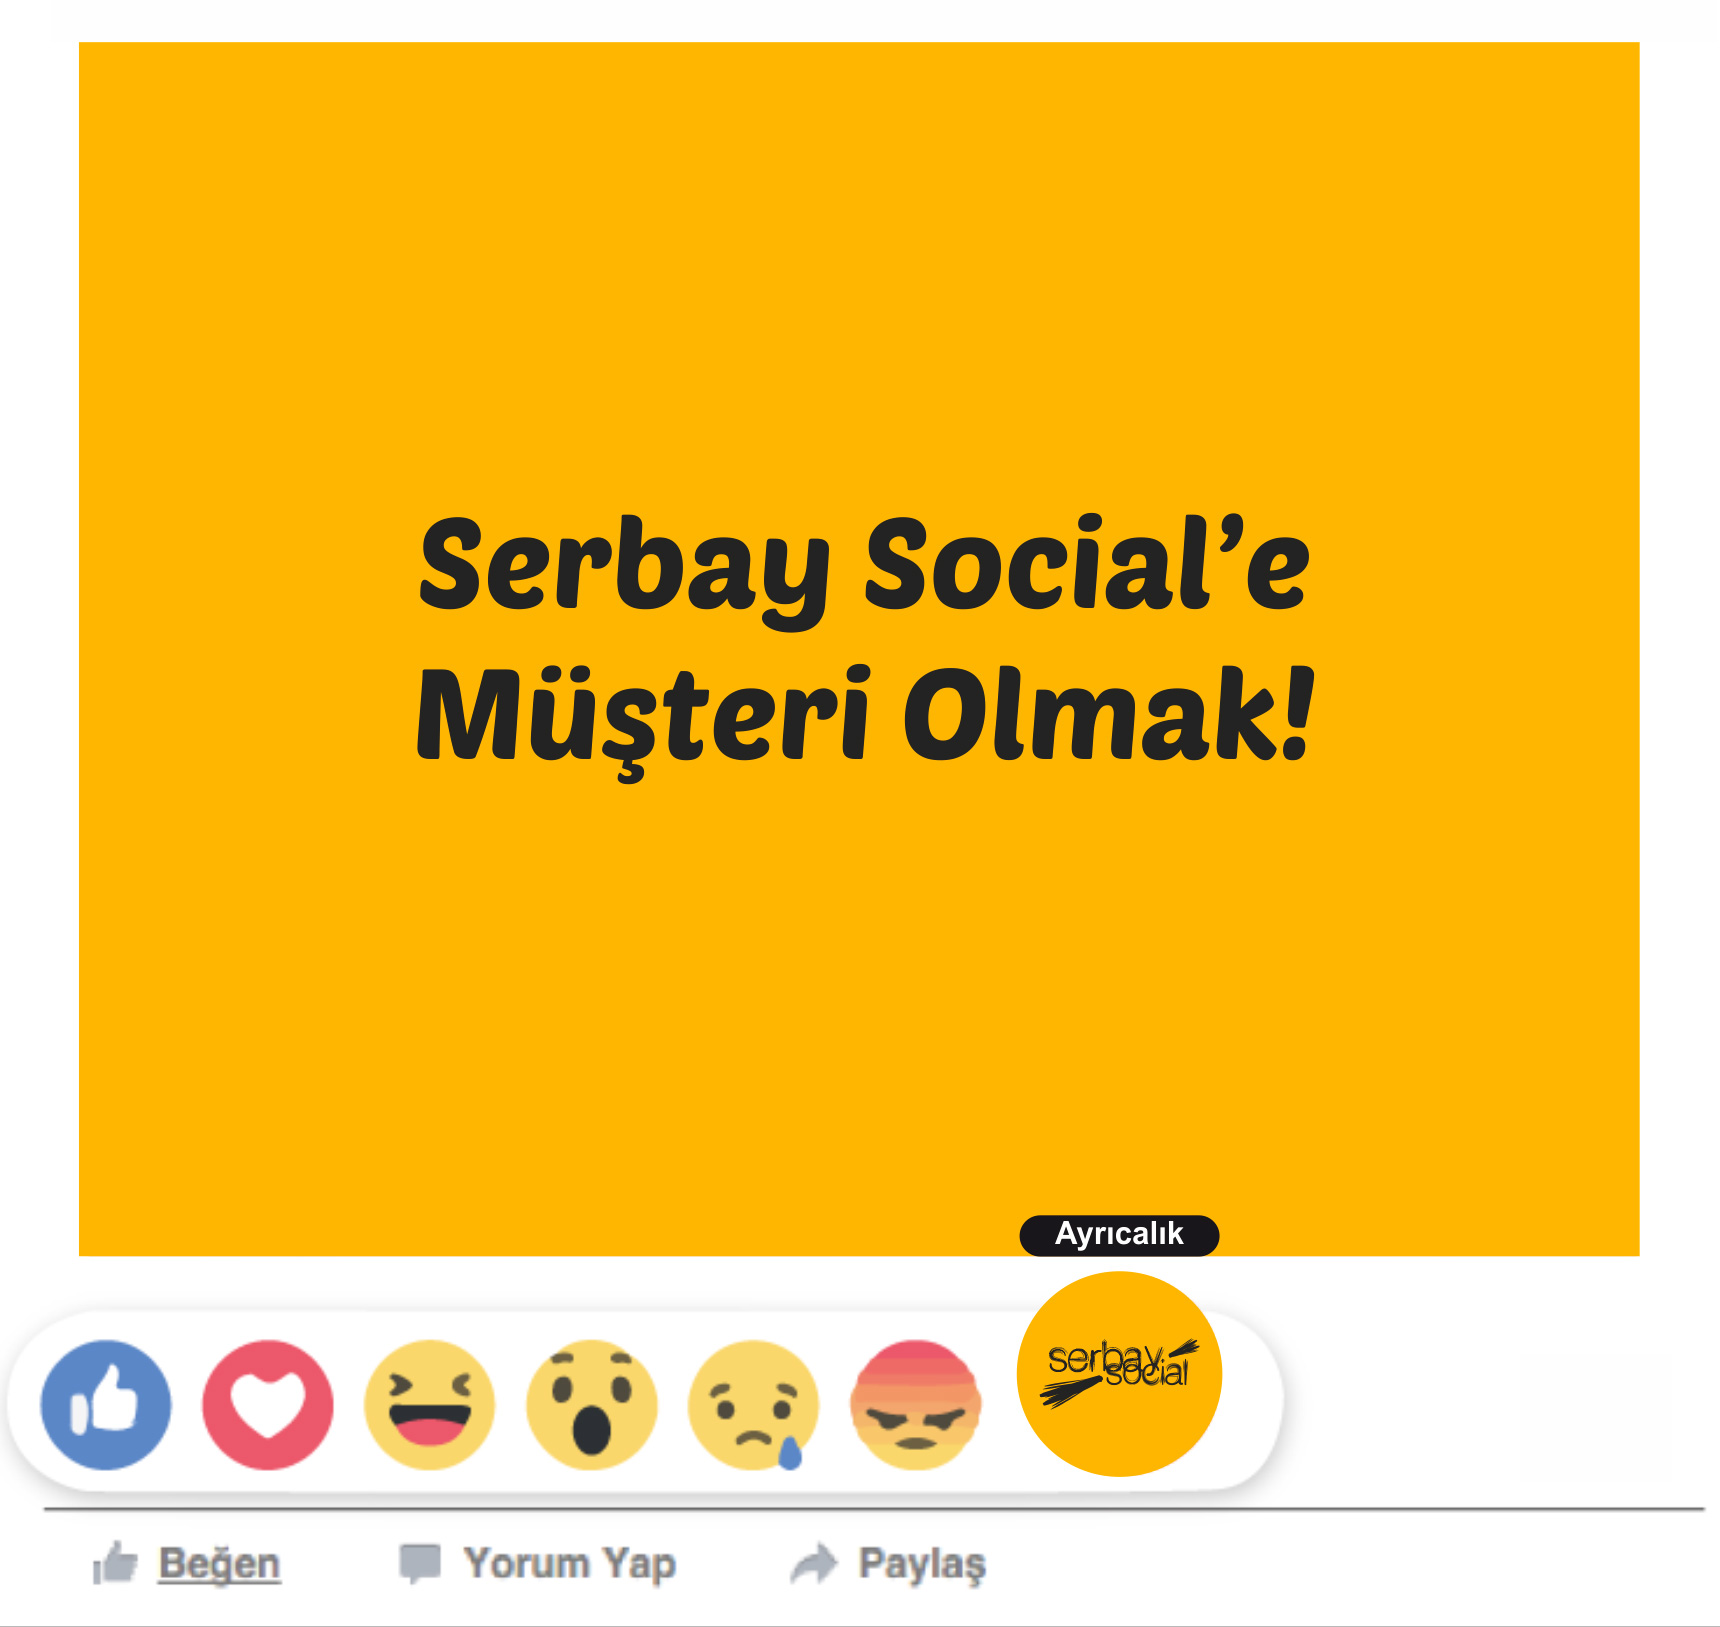 Serbay Social'e Müşteri Olmak!